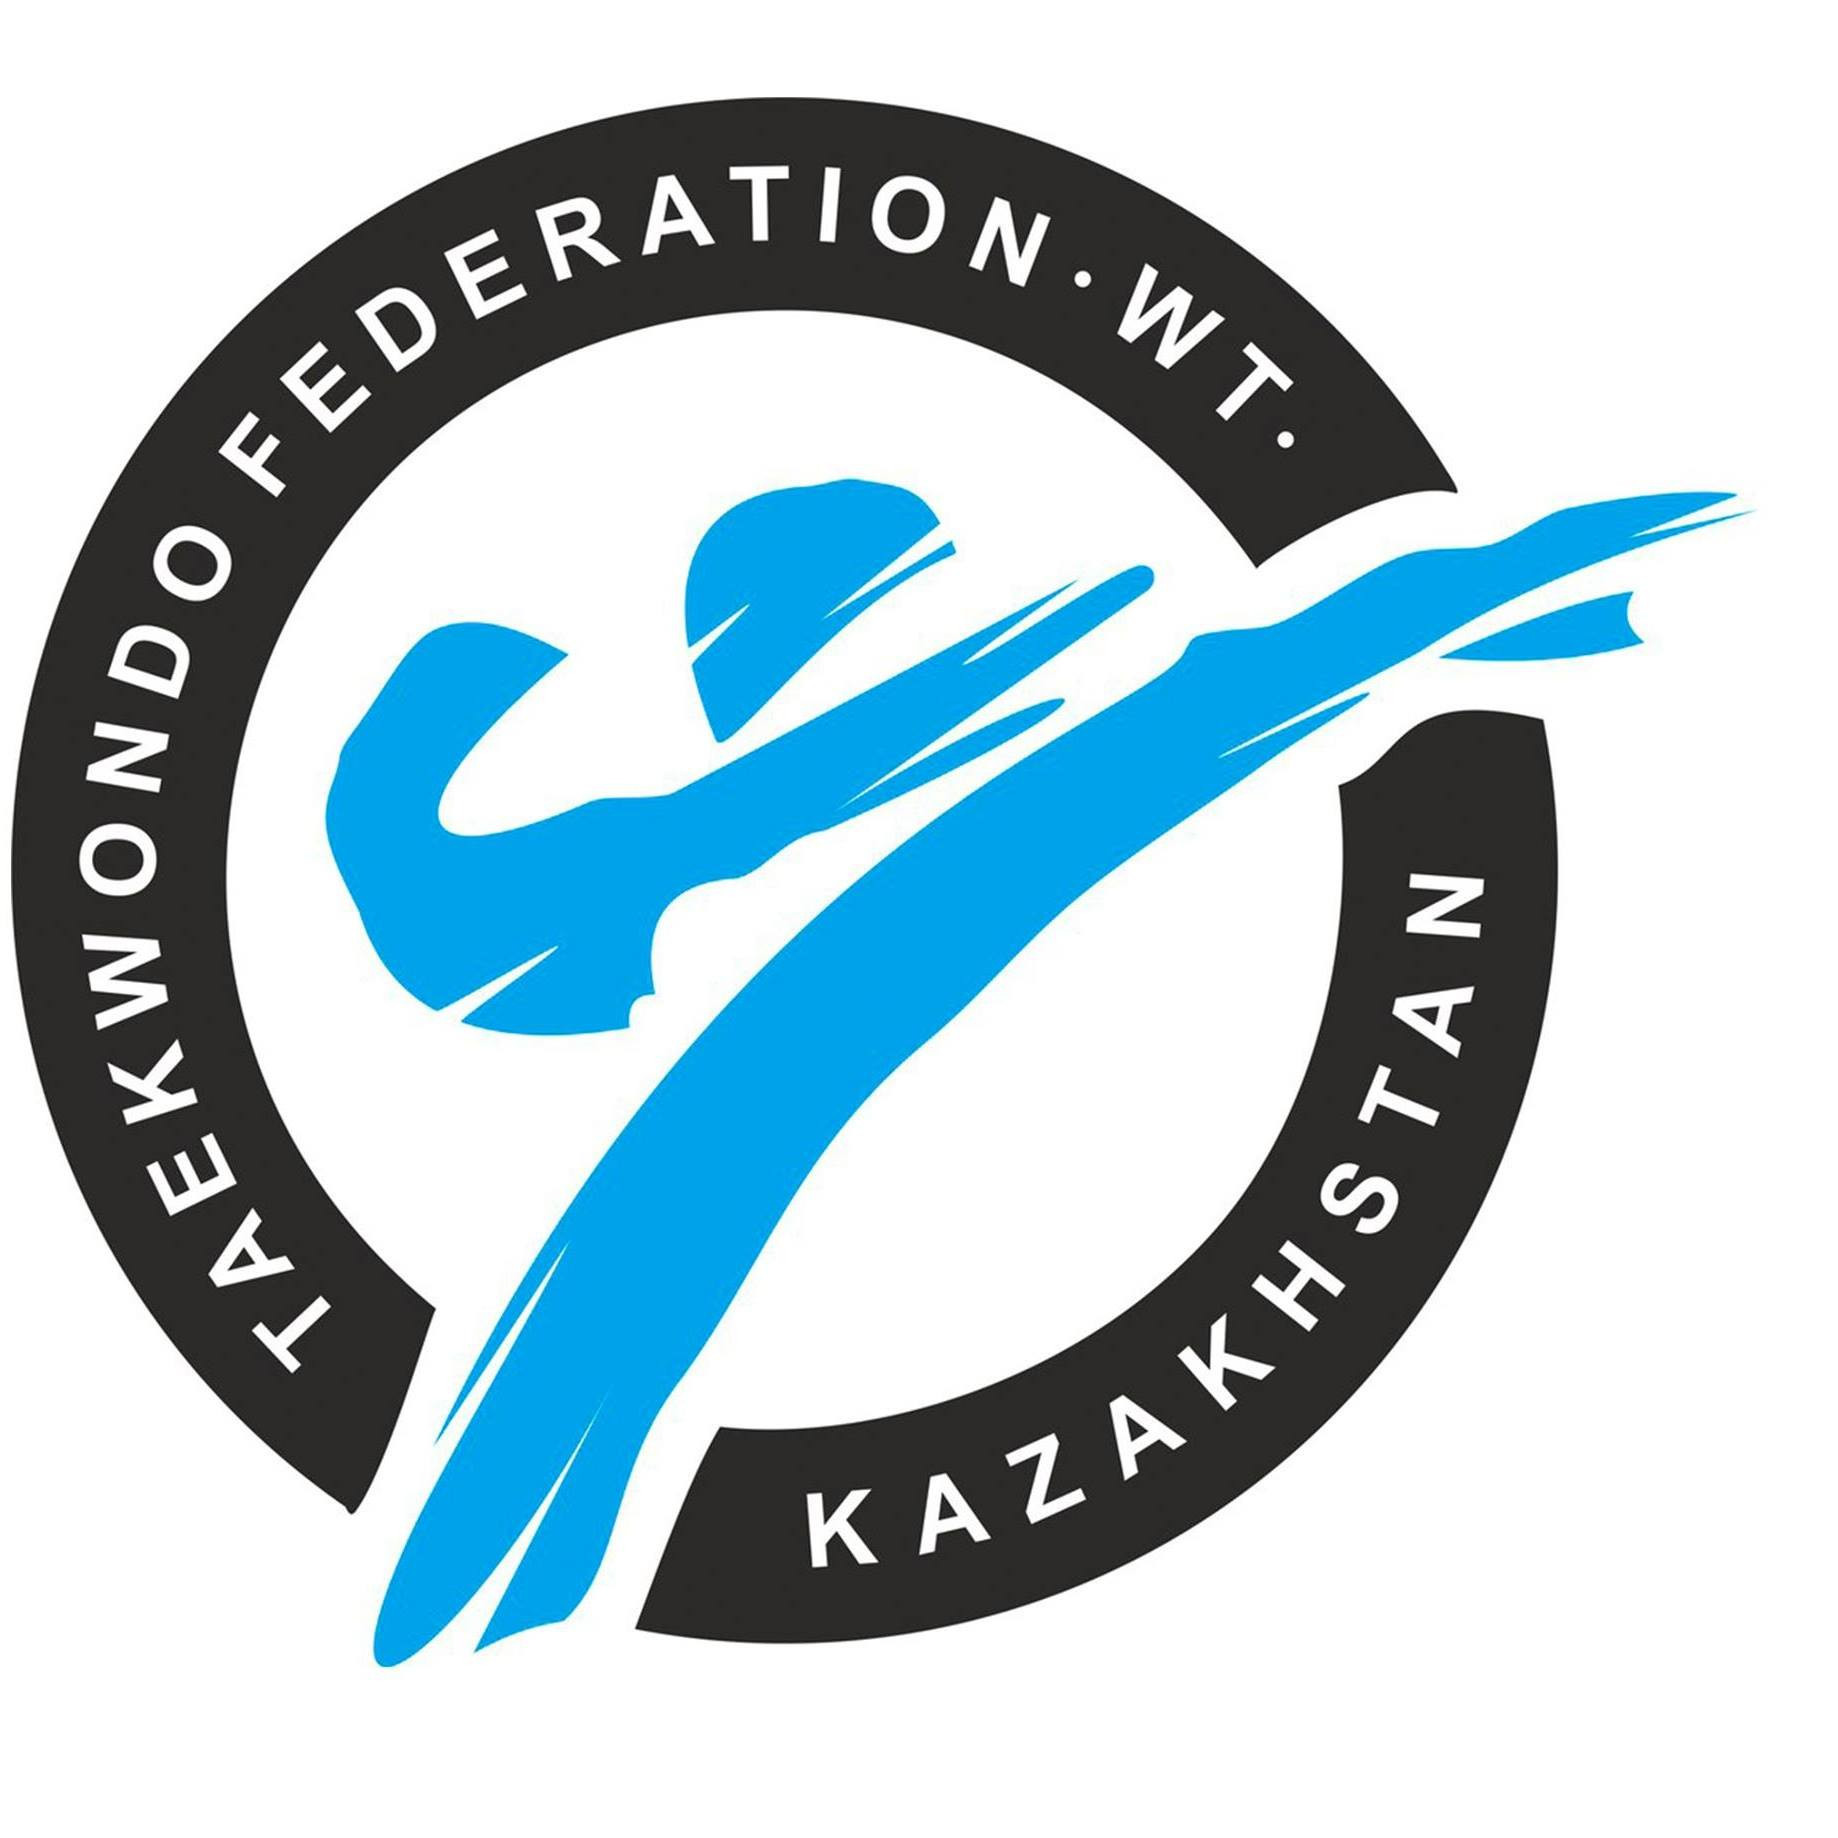 Kazakhstan Taekwondo Federation announces Children's Championship